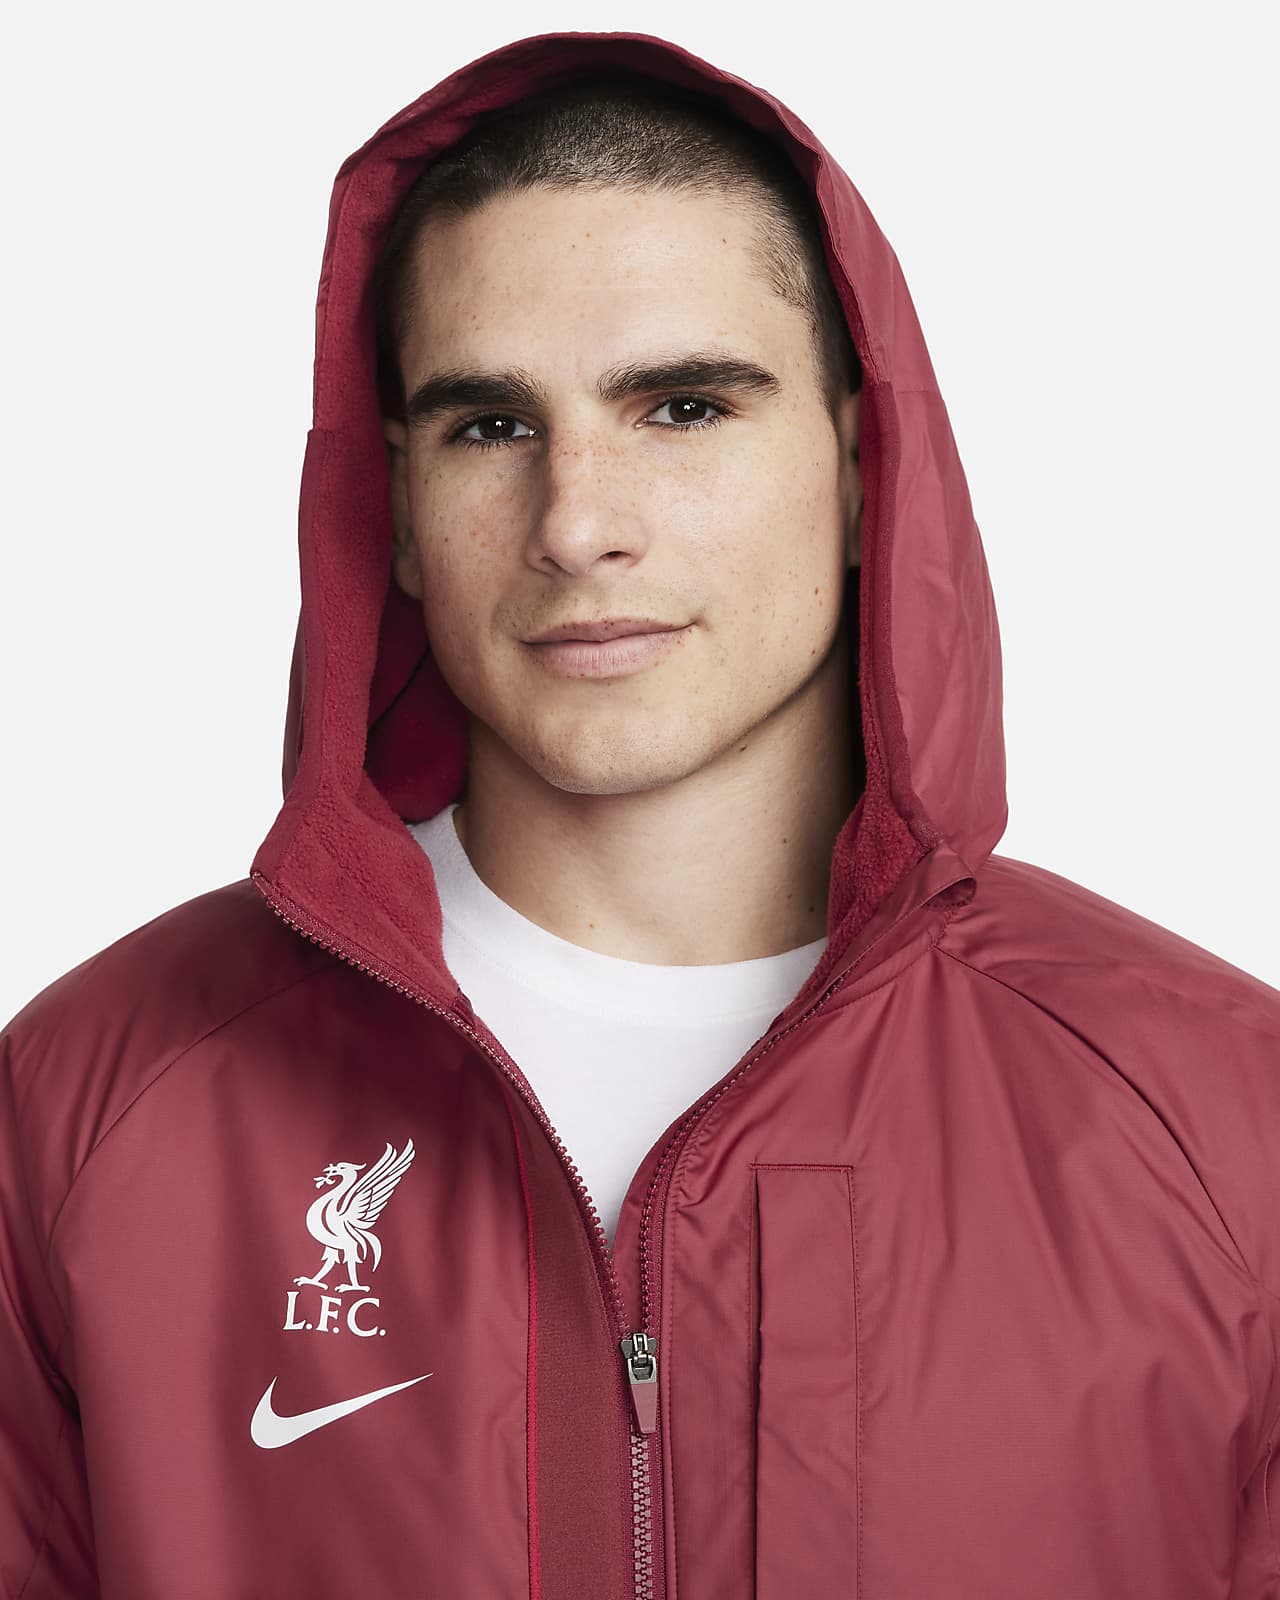 Nike Liverpool AWF Jacket Adults Maroon/Red, £44.00